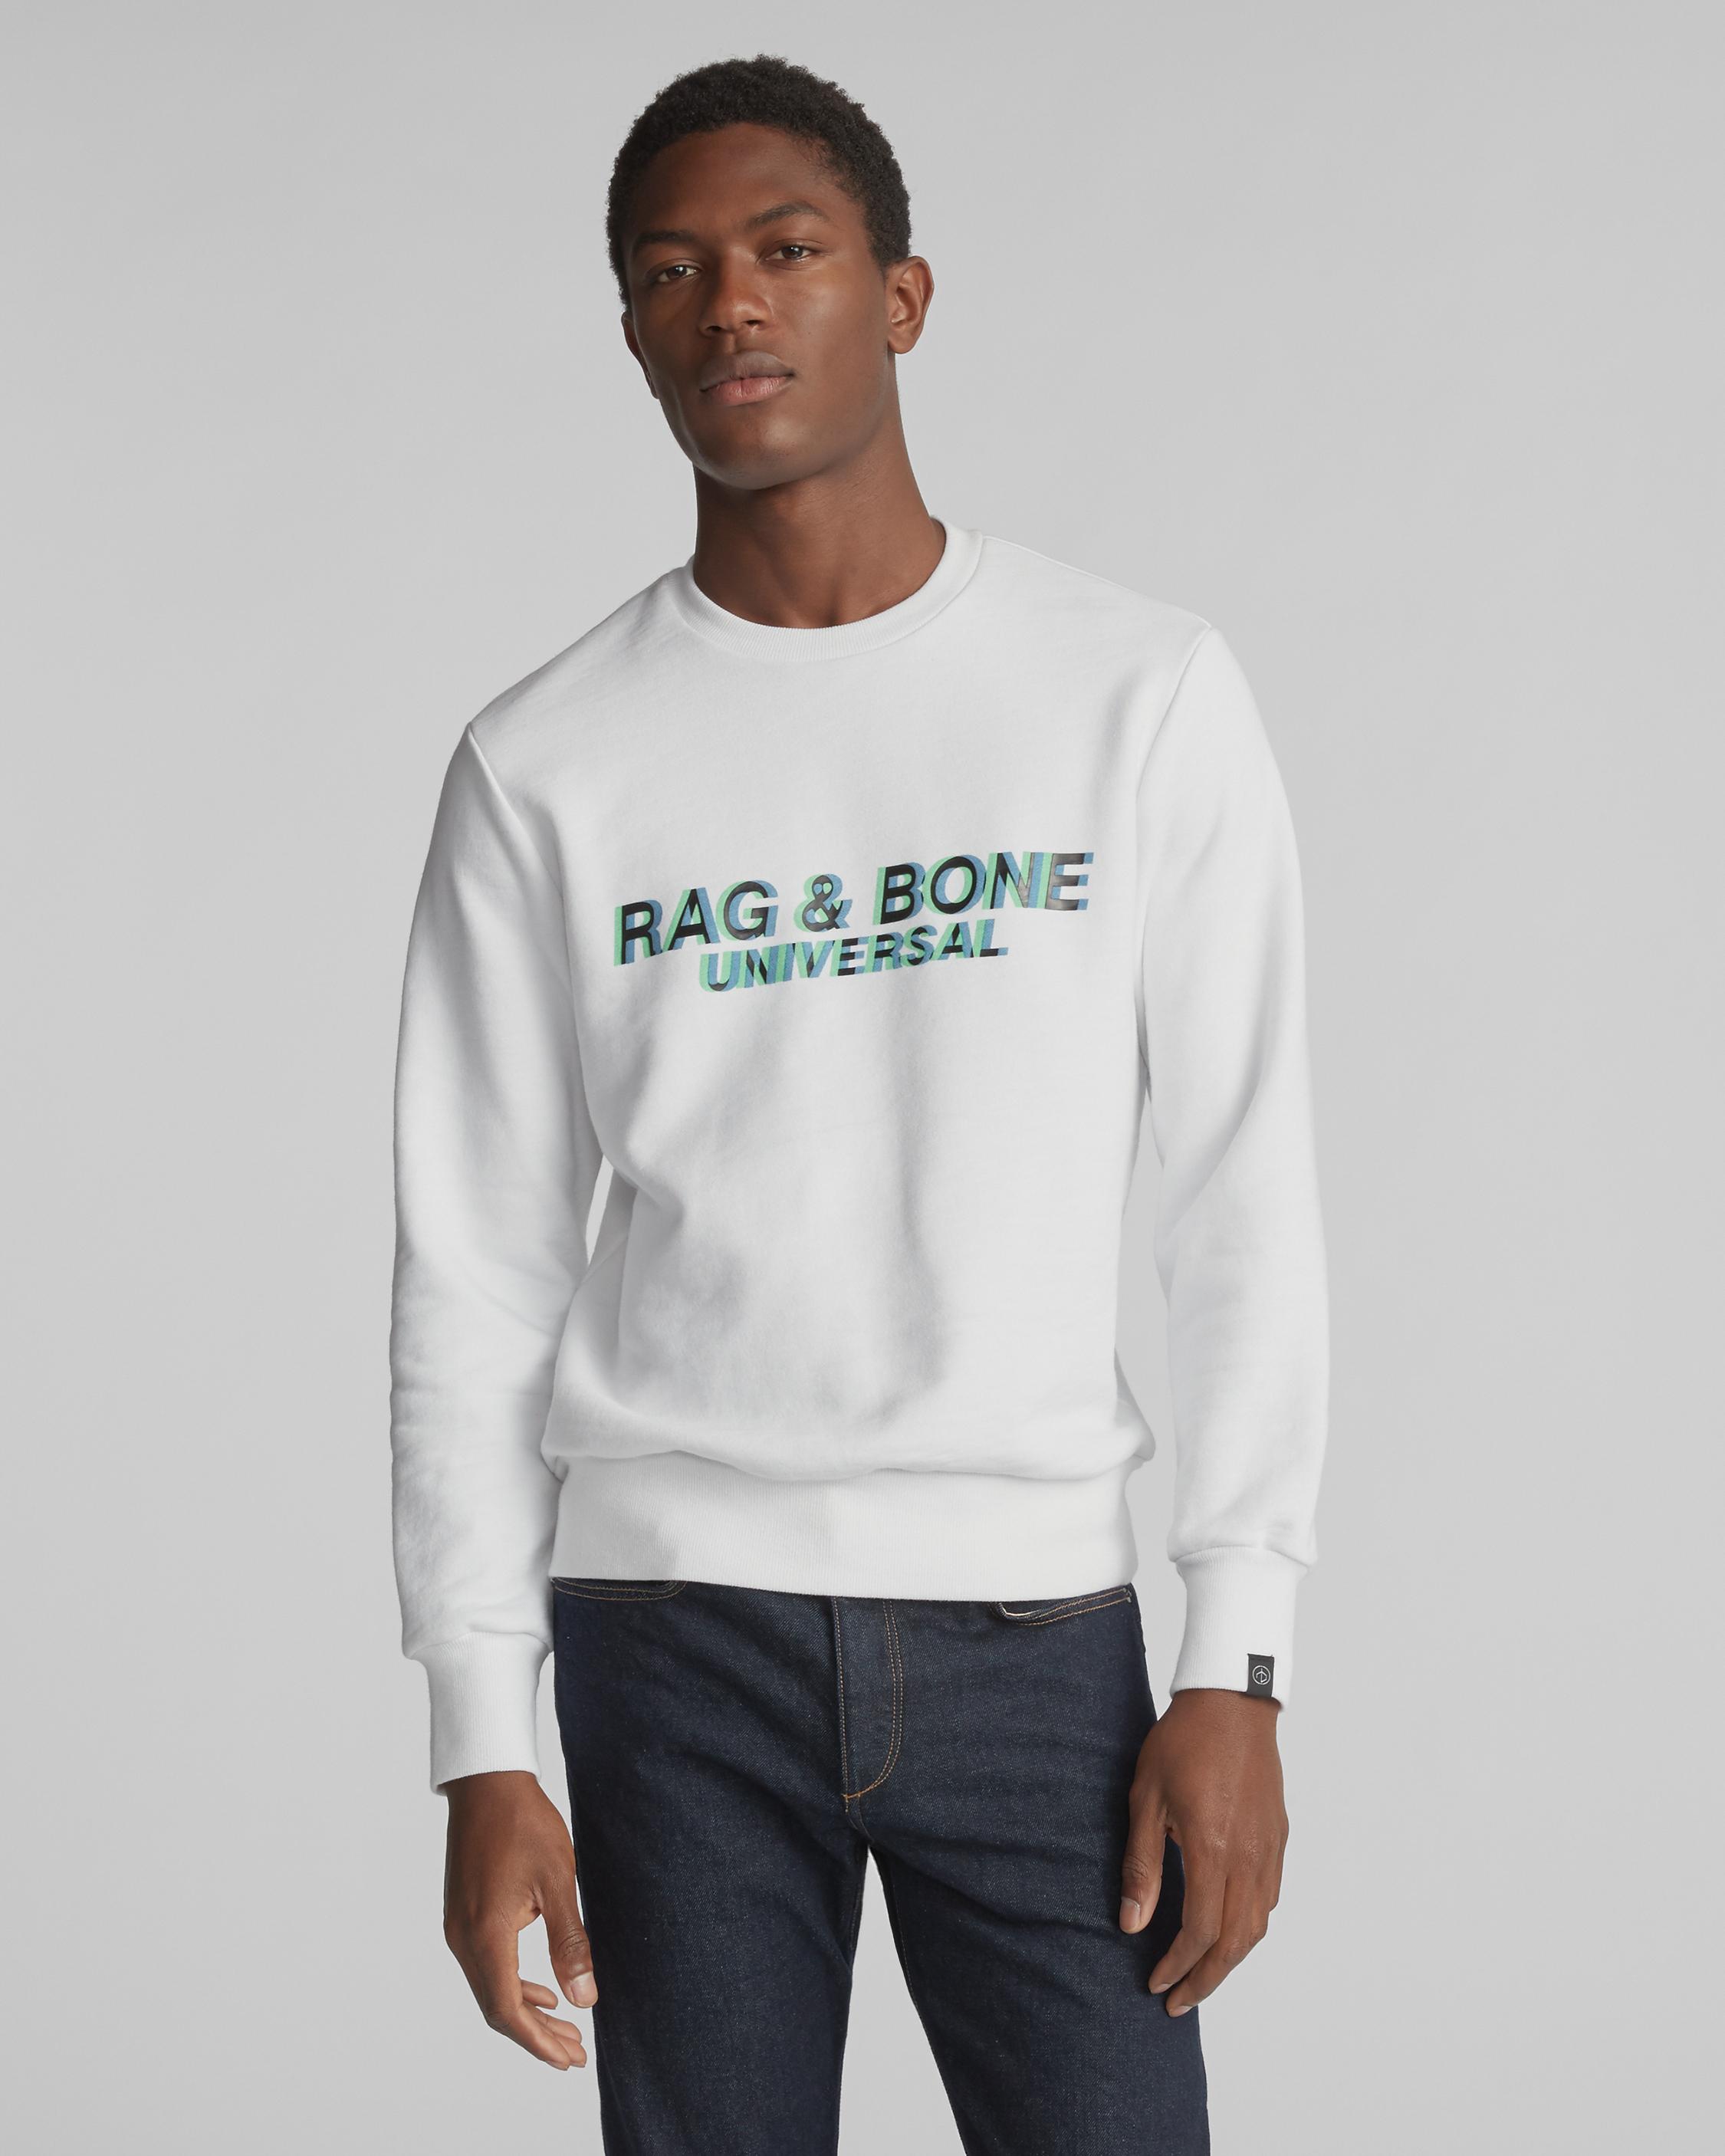 rag and bone universal sweatshirt